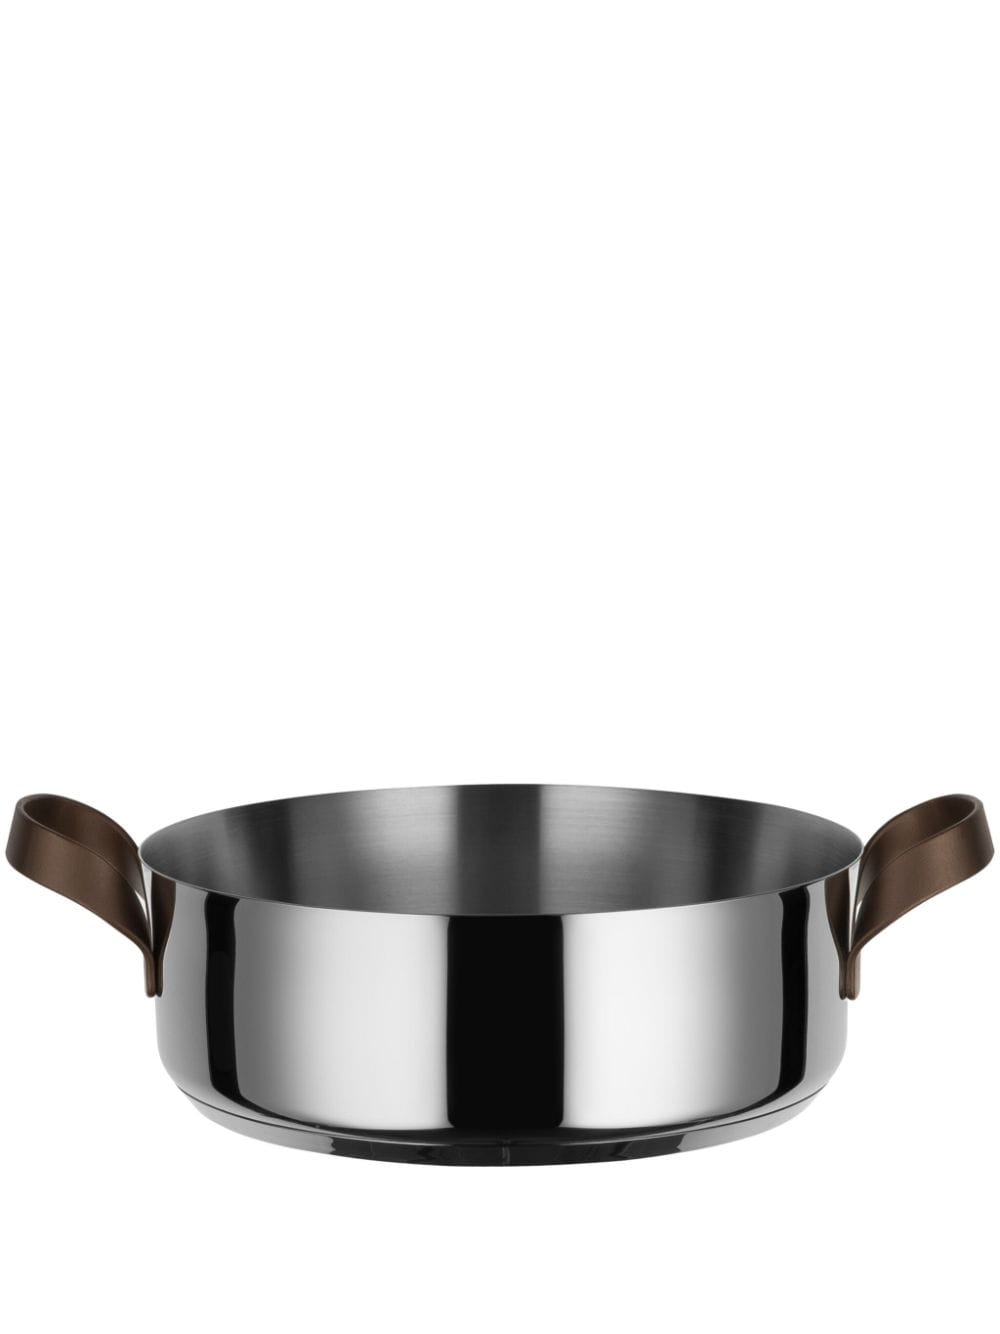 Alessi Edo Low Casserole stainless-steel saucepan (28cm x 11.5cm x 36cm) - Silver